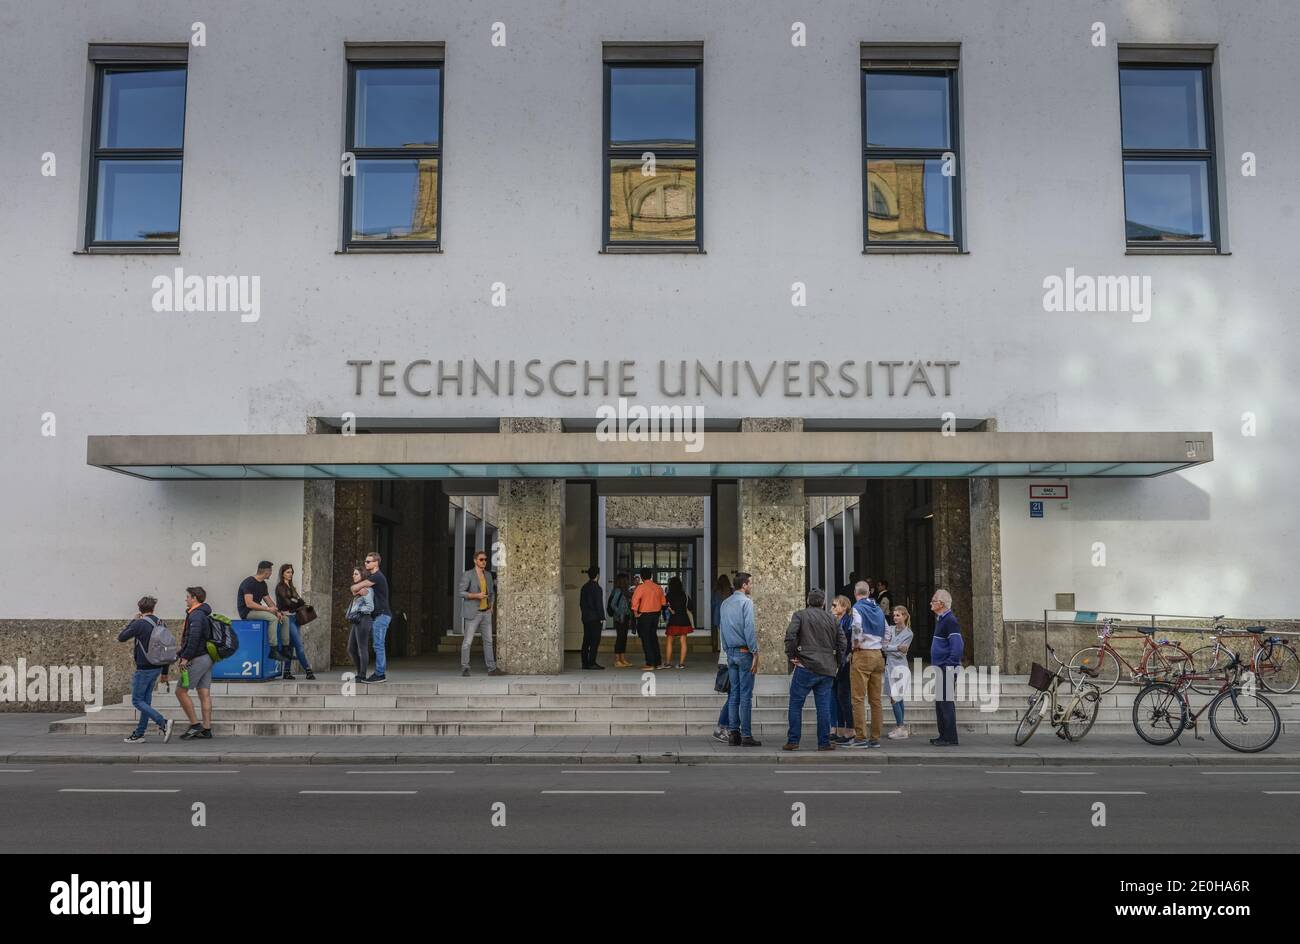 Technische Universitaet, Hauptgebaeude, Arcisstrasse, Monaco di Baviera, Deutschland Foto Stock